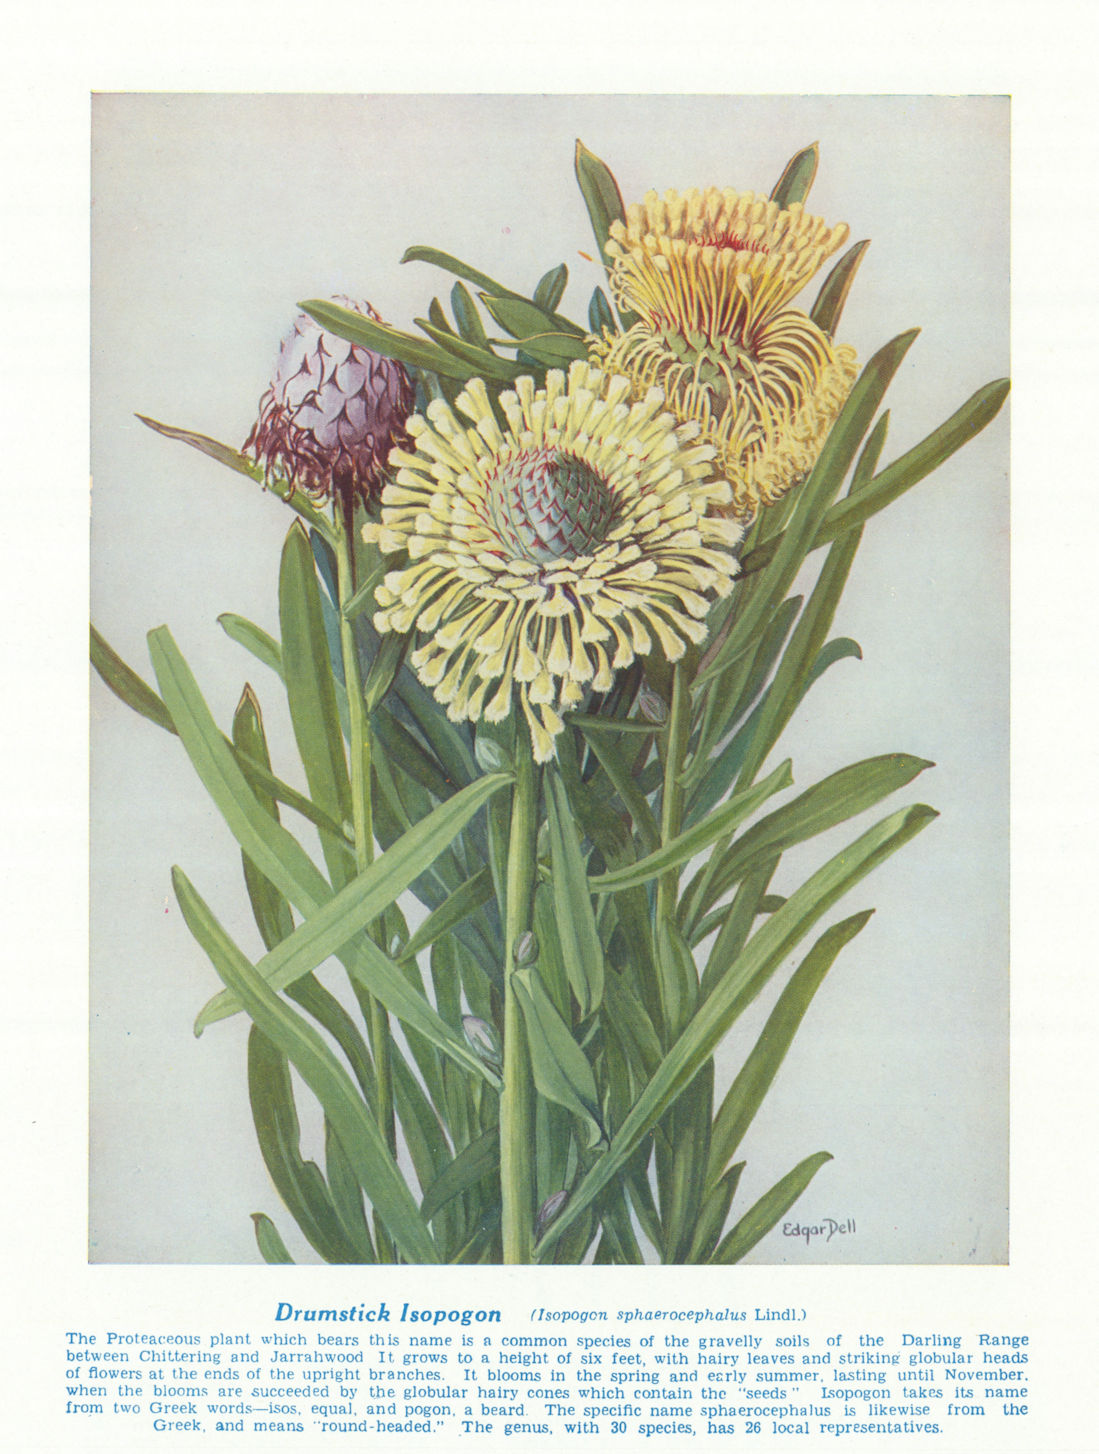 Associate Product Drumstick lsopogon (lsopogon sphaerocephalus). West Australian Wild Flowers 1950